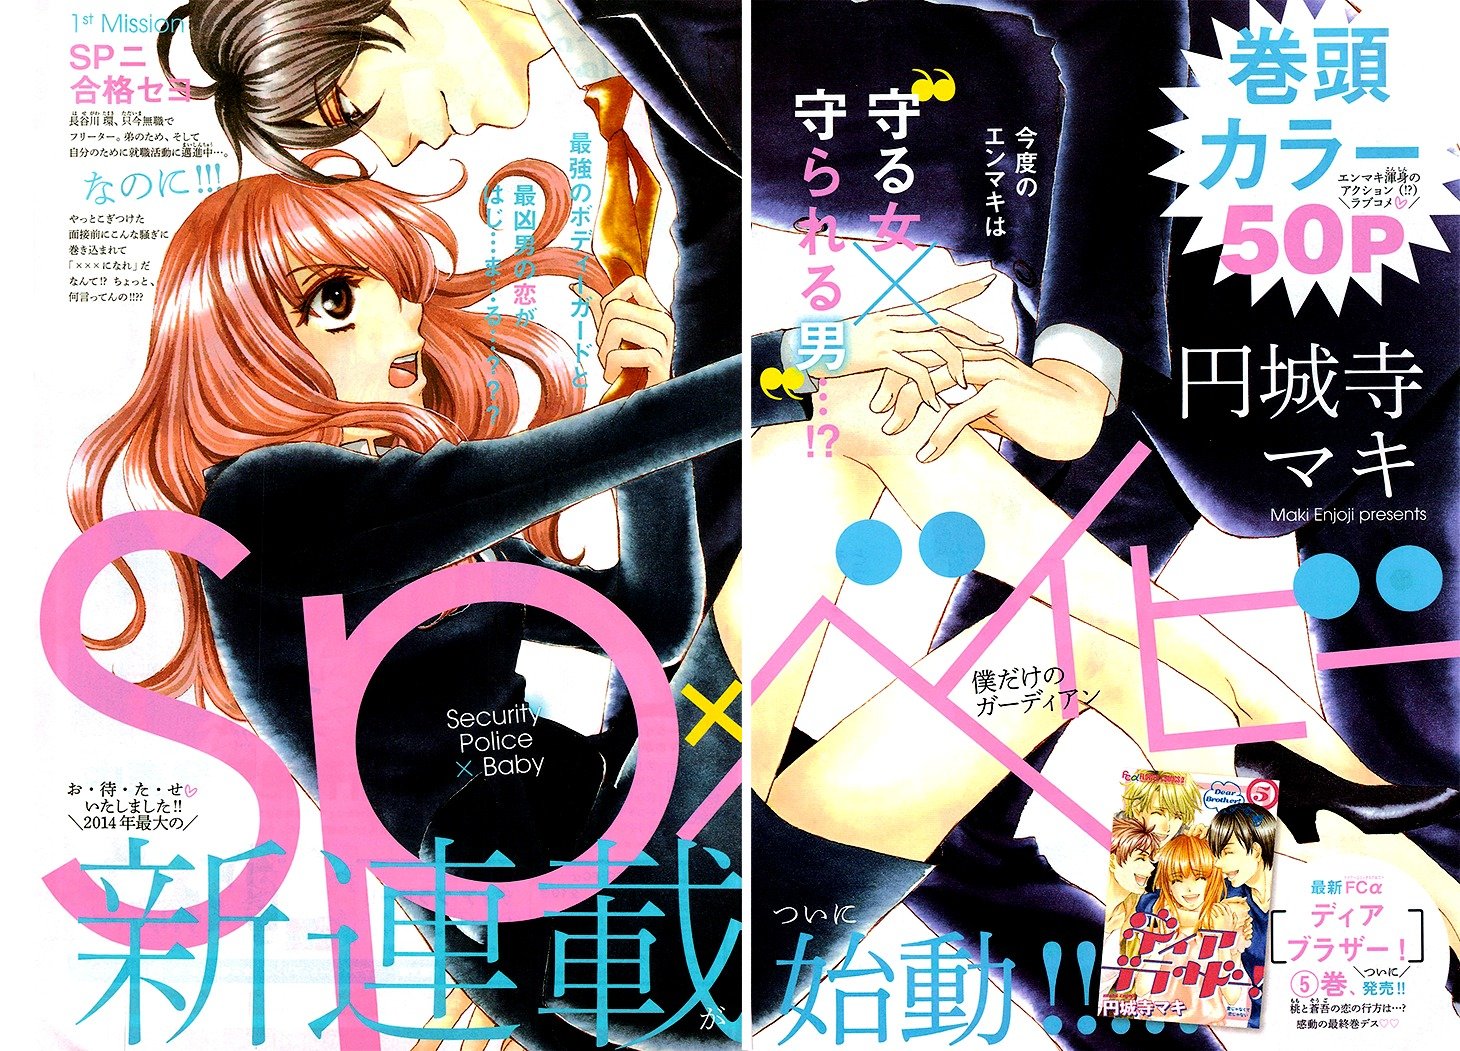 Viz Media Debuts Mature Manga Series On VizManga.com - Anime News